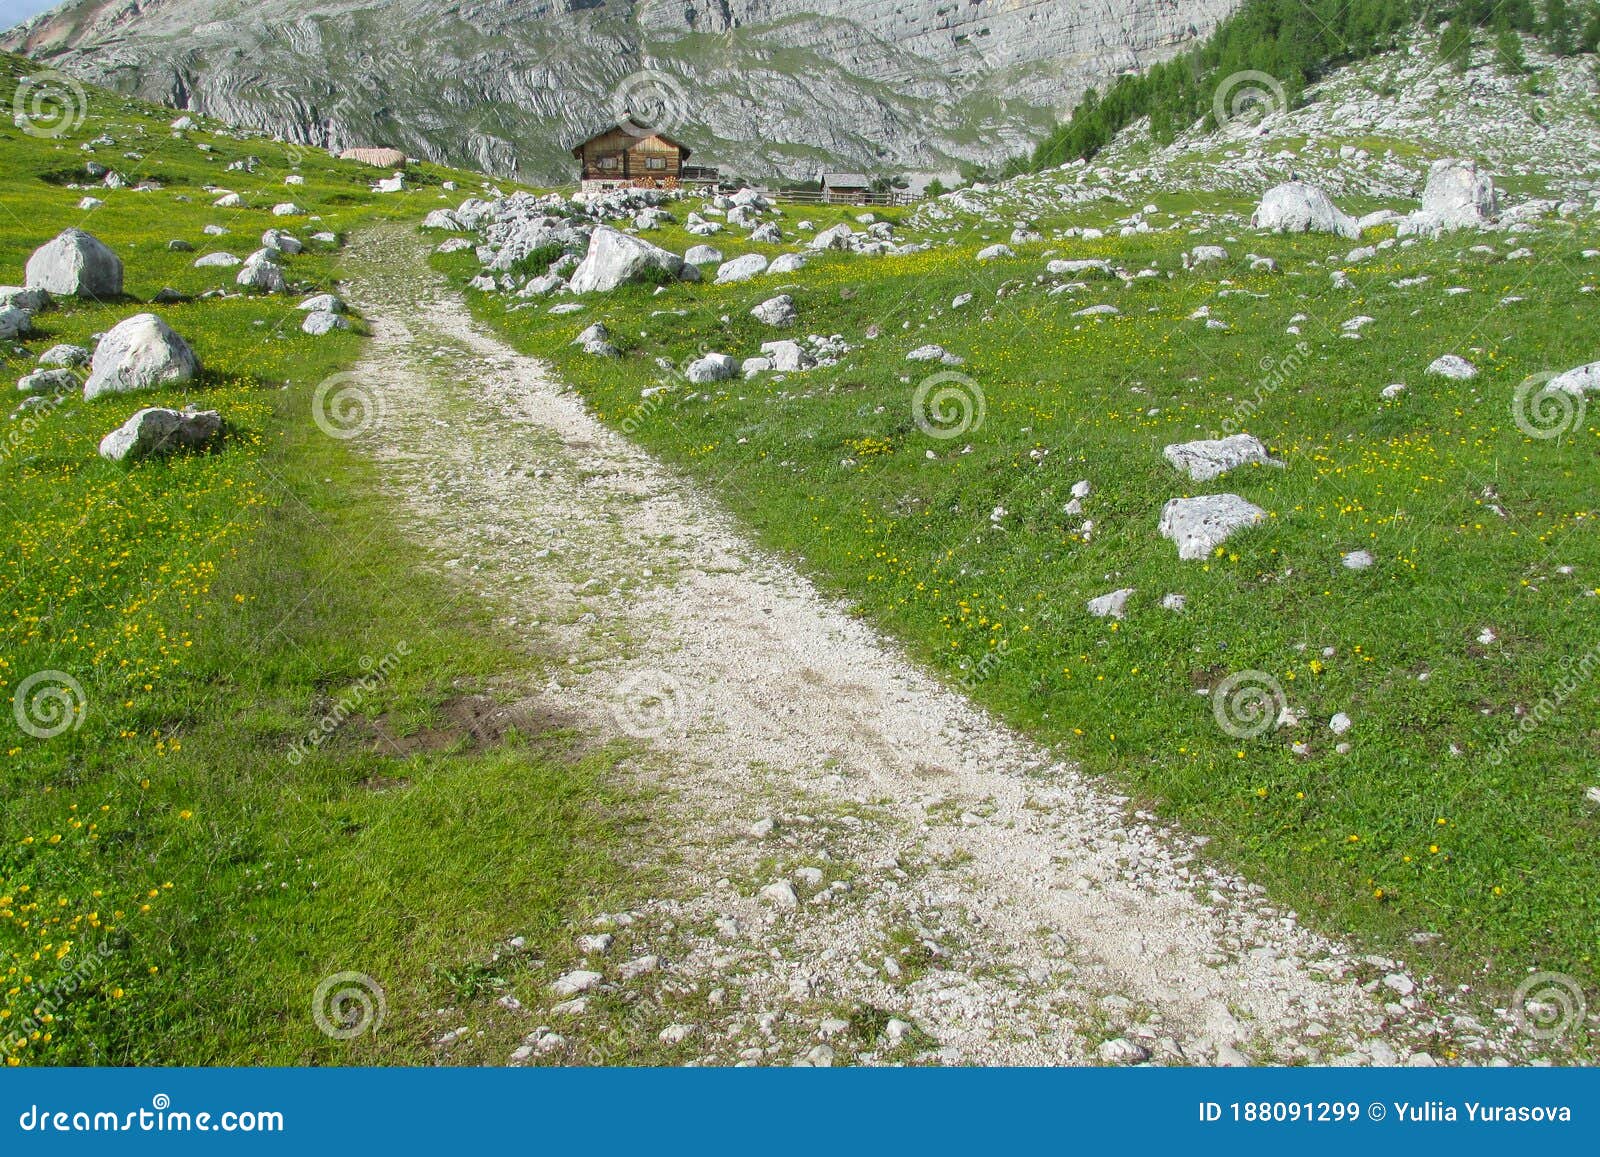 refugio, refuge mountain hut in the alps